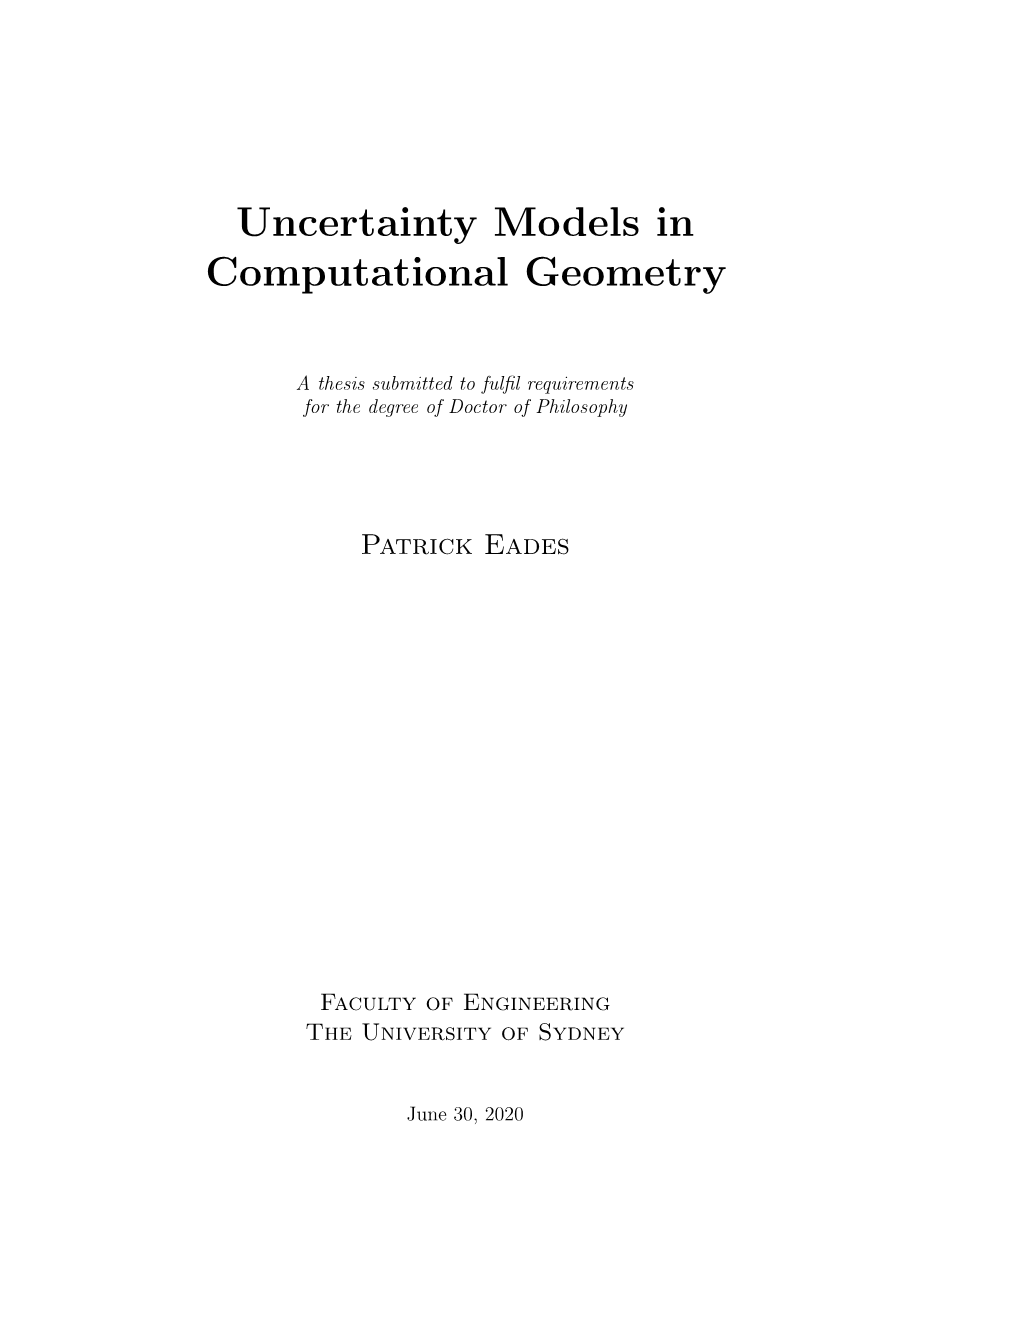 Uncertainty Models in Computational Geometry